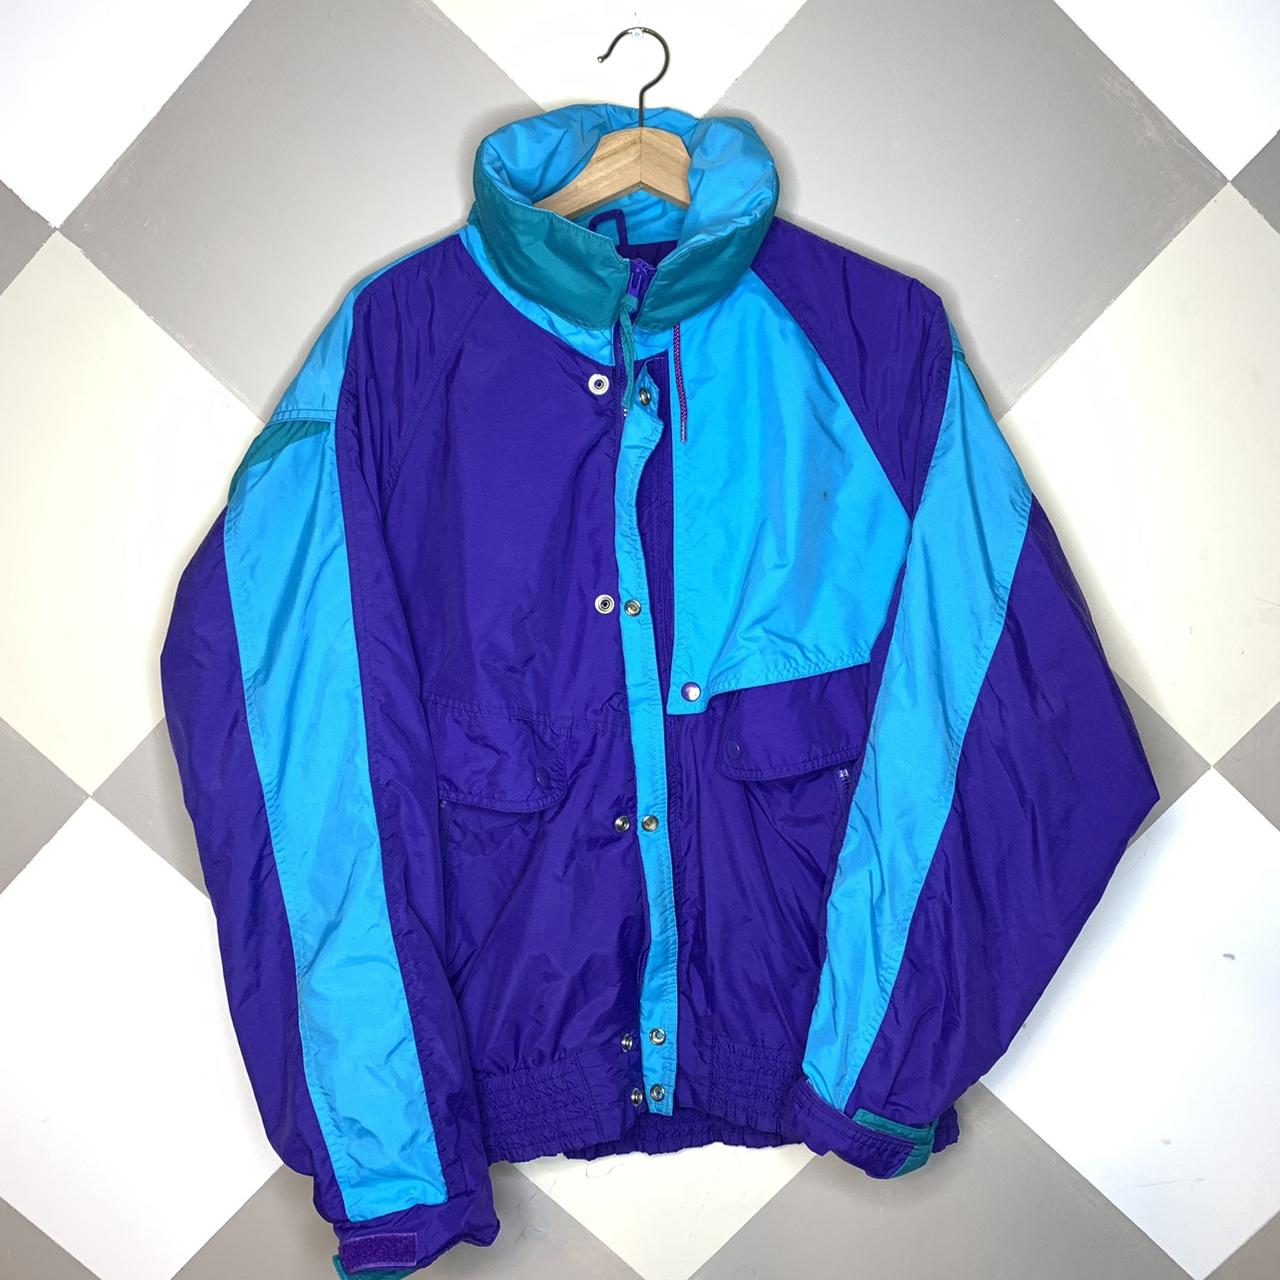 vintage ski jacket 80s style very colorful 80s... - Depop